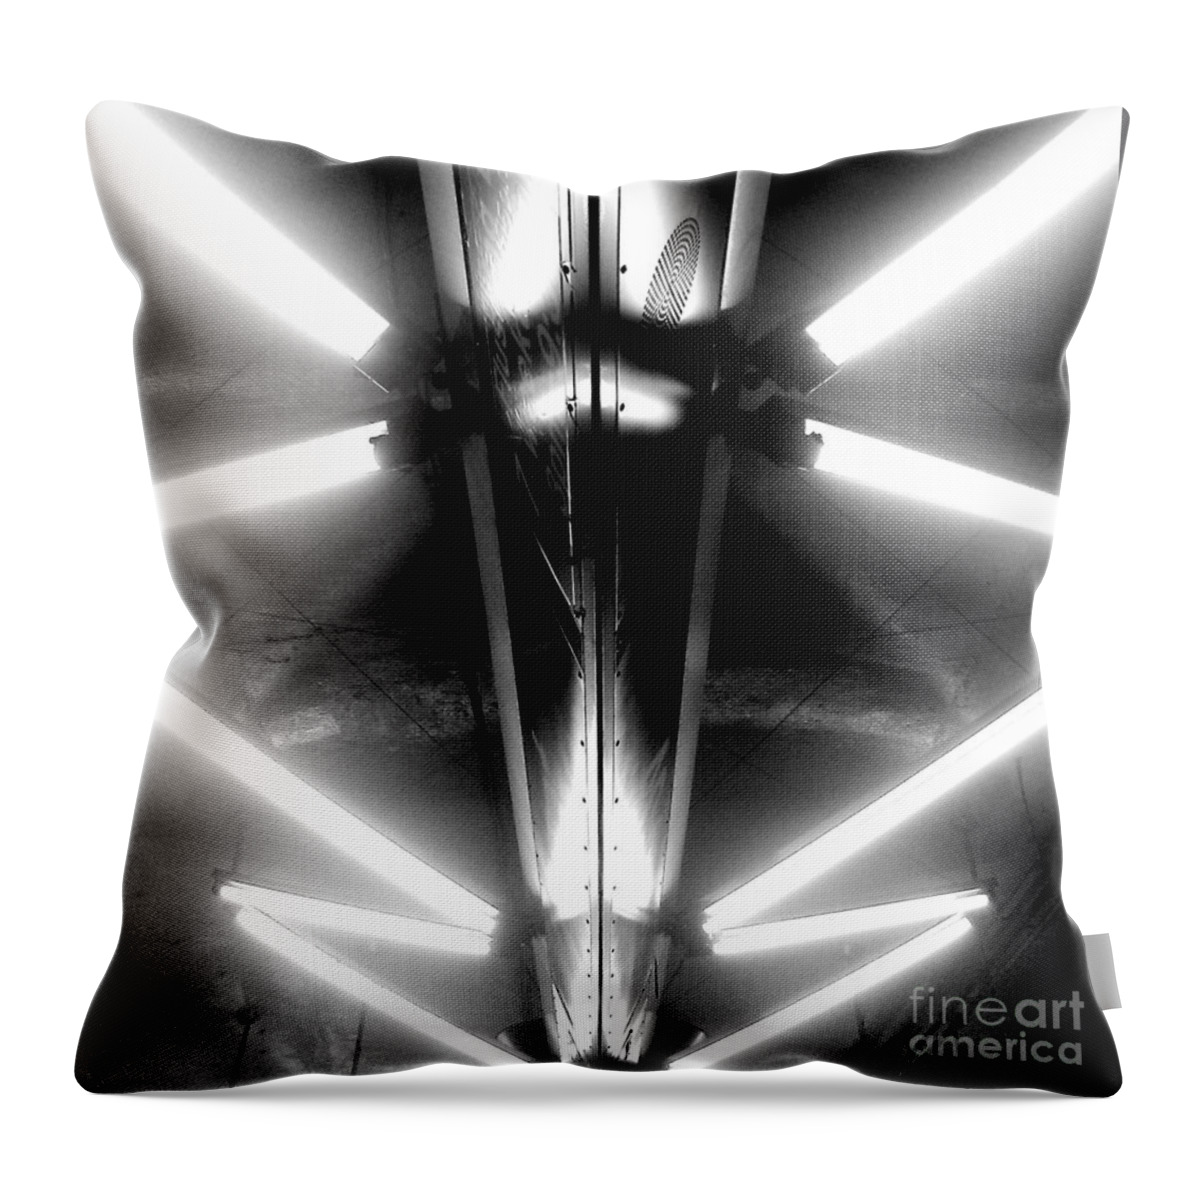 Light Sabers Throw Pillow featuring the photograph Light Sabers by James Aiken